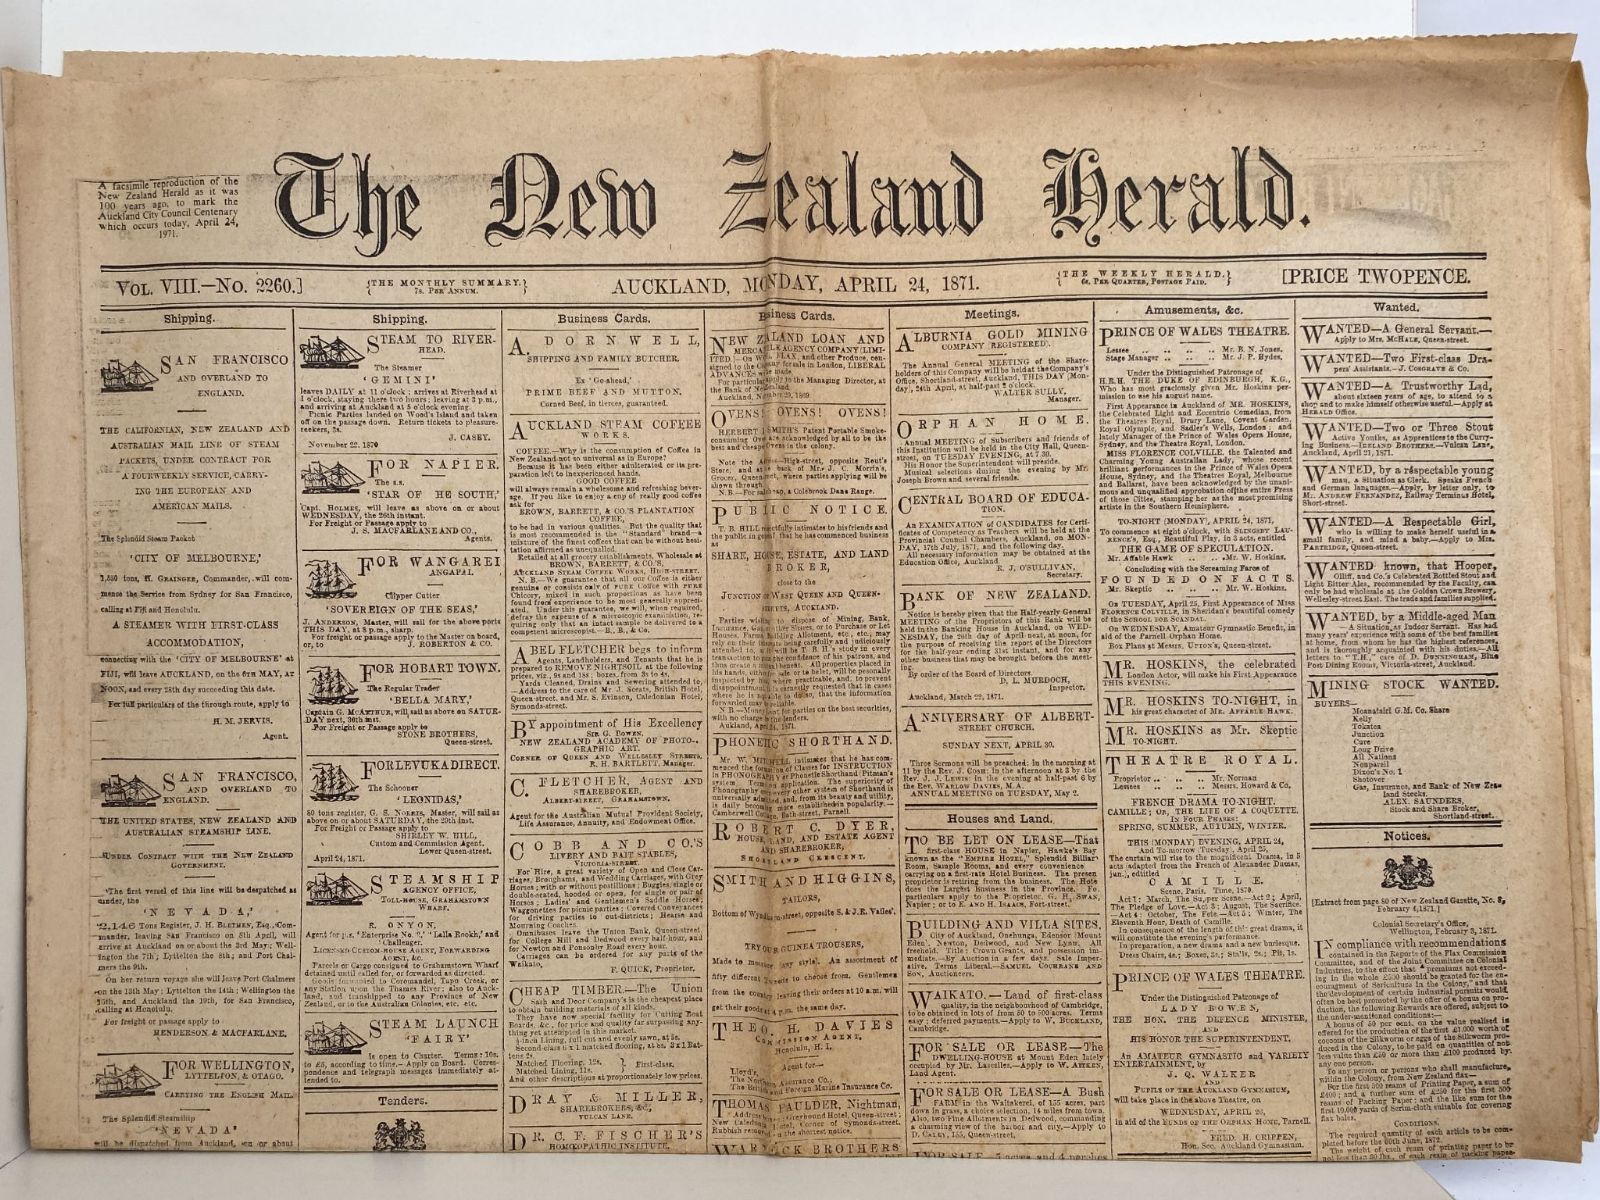 OLD NEWSPAPER: The New Zealand Herald, 24 April 1871 - Vol 3. No 2660.